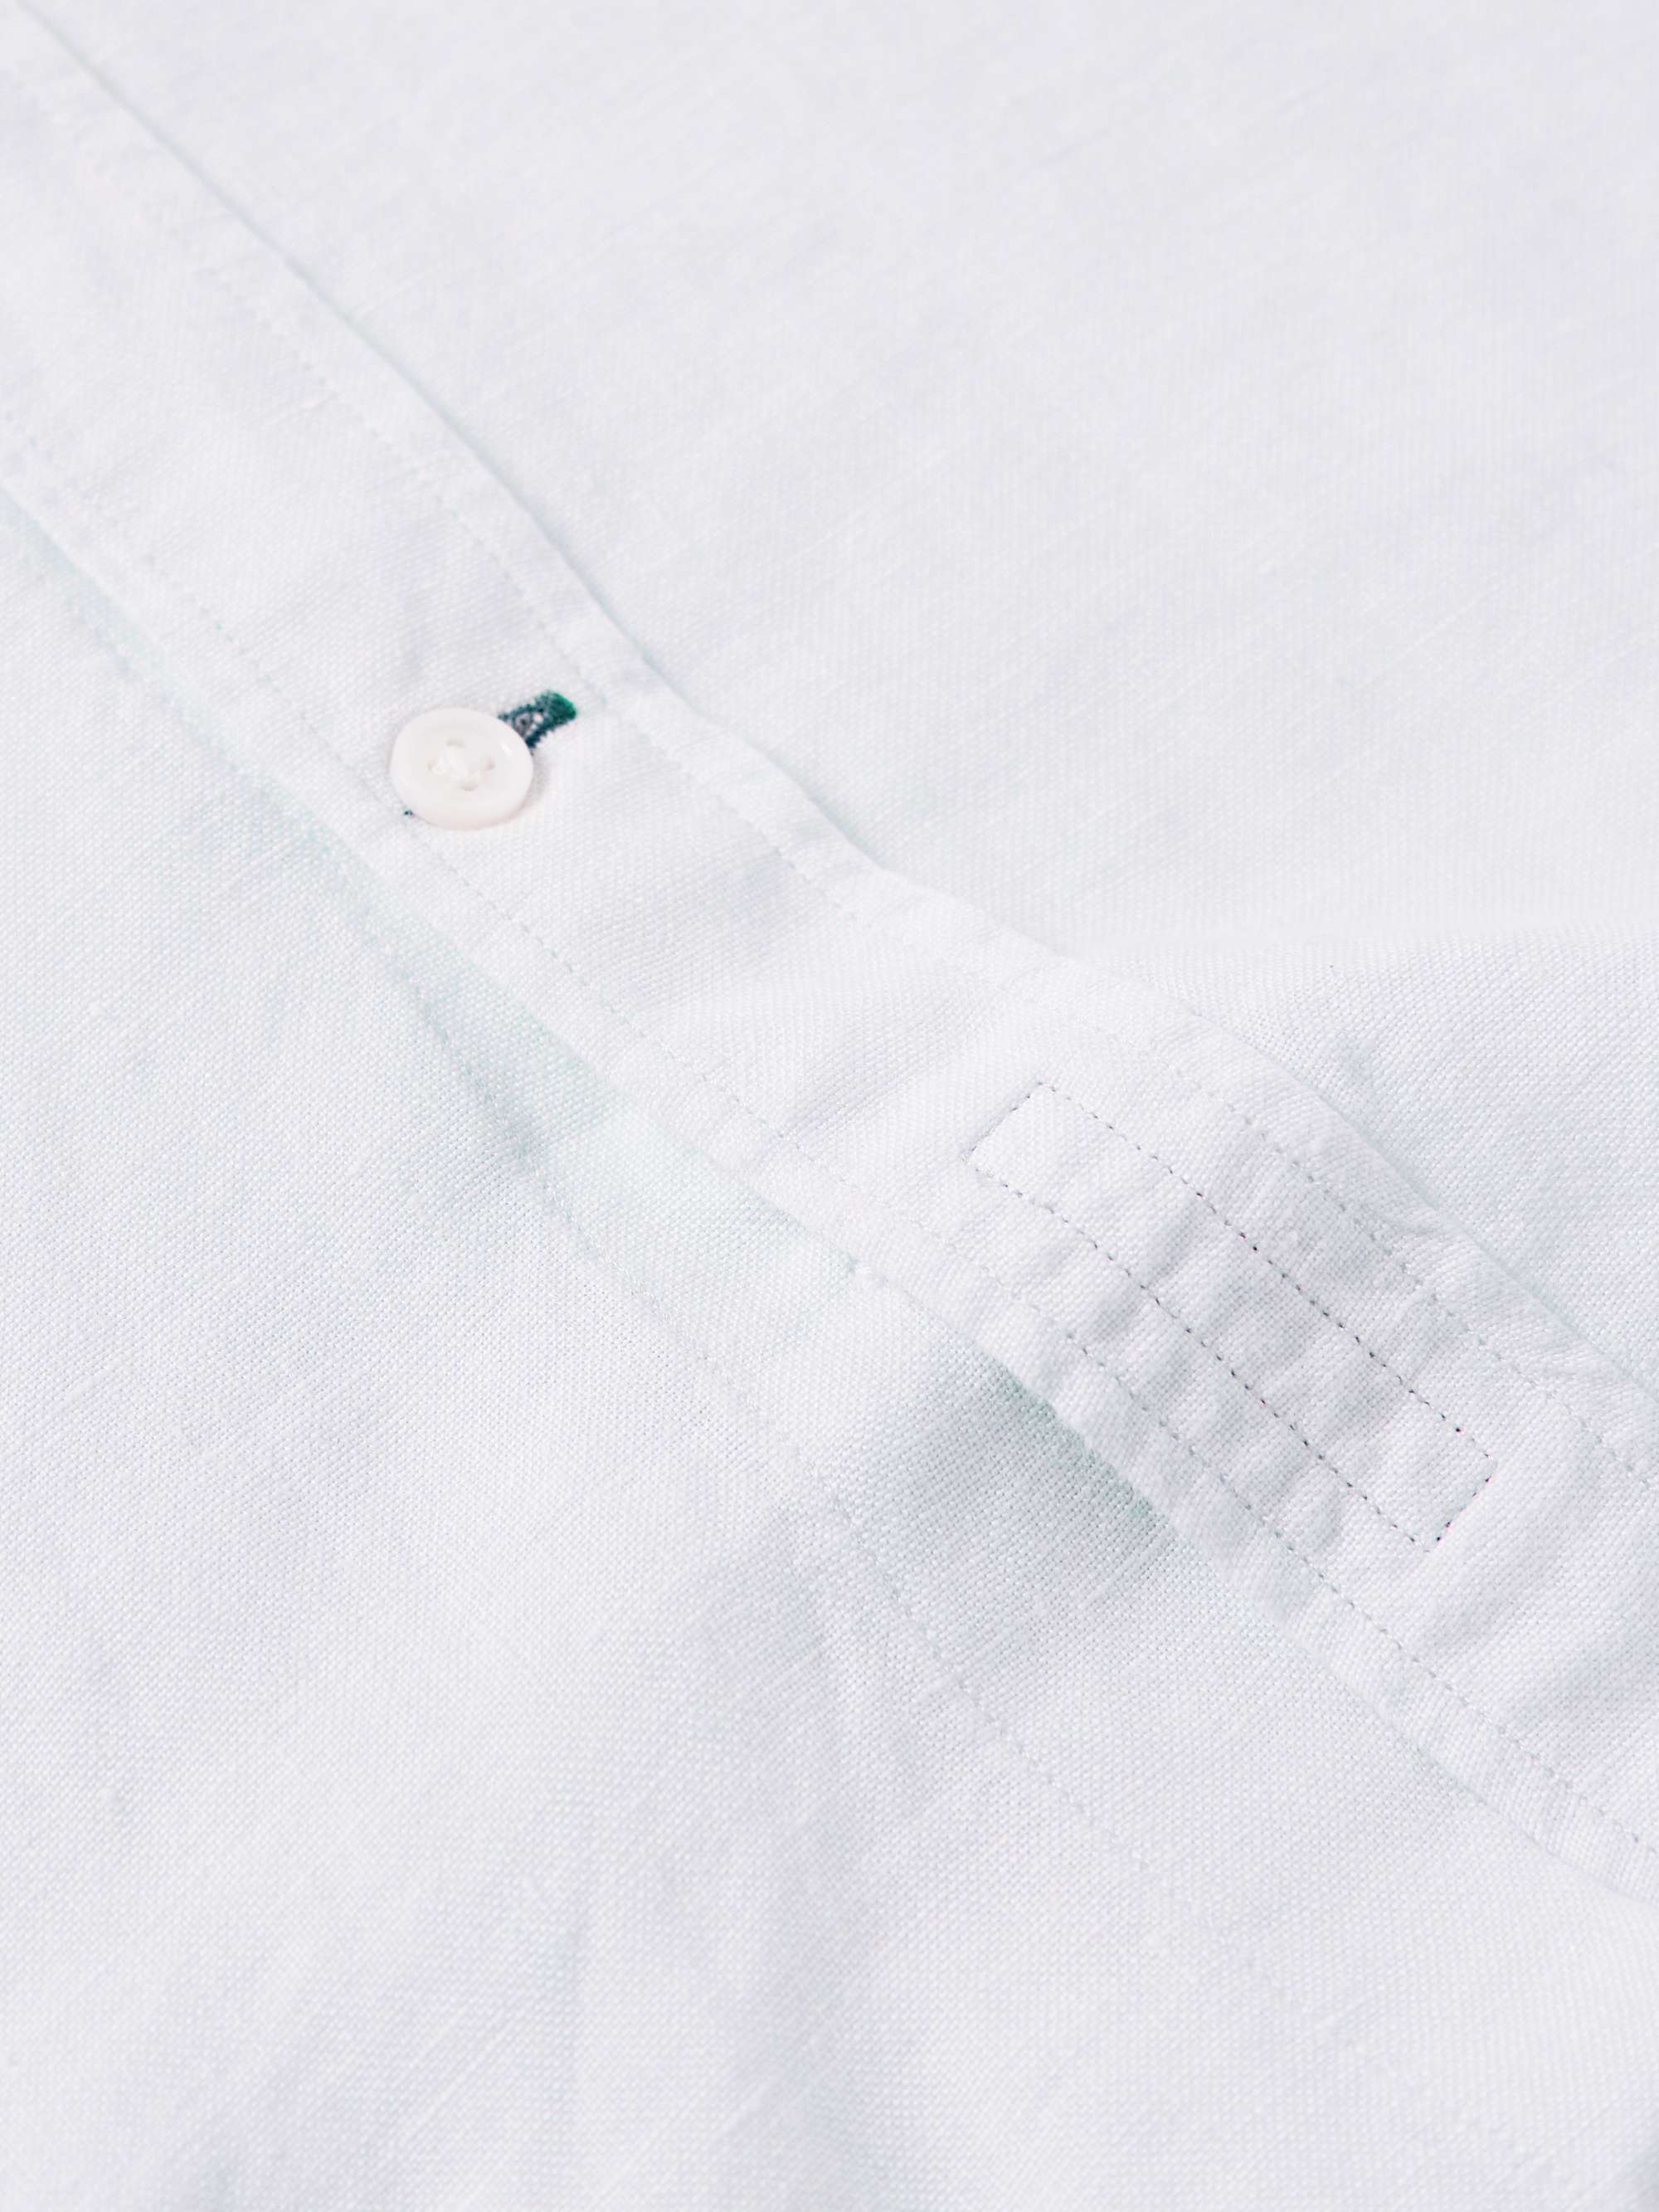 CLUB MONACO Button-Down Collar Linen Shirt for Men | MR PORTER